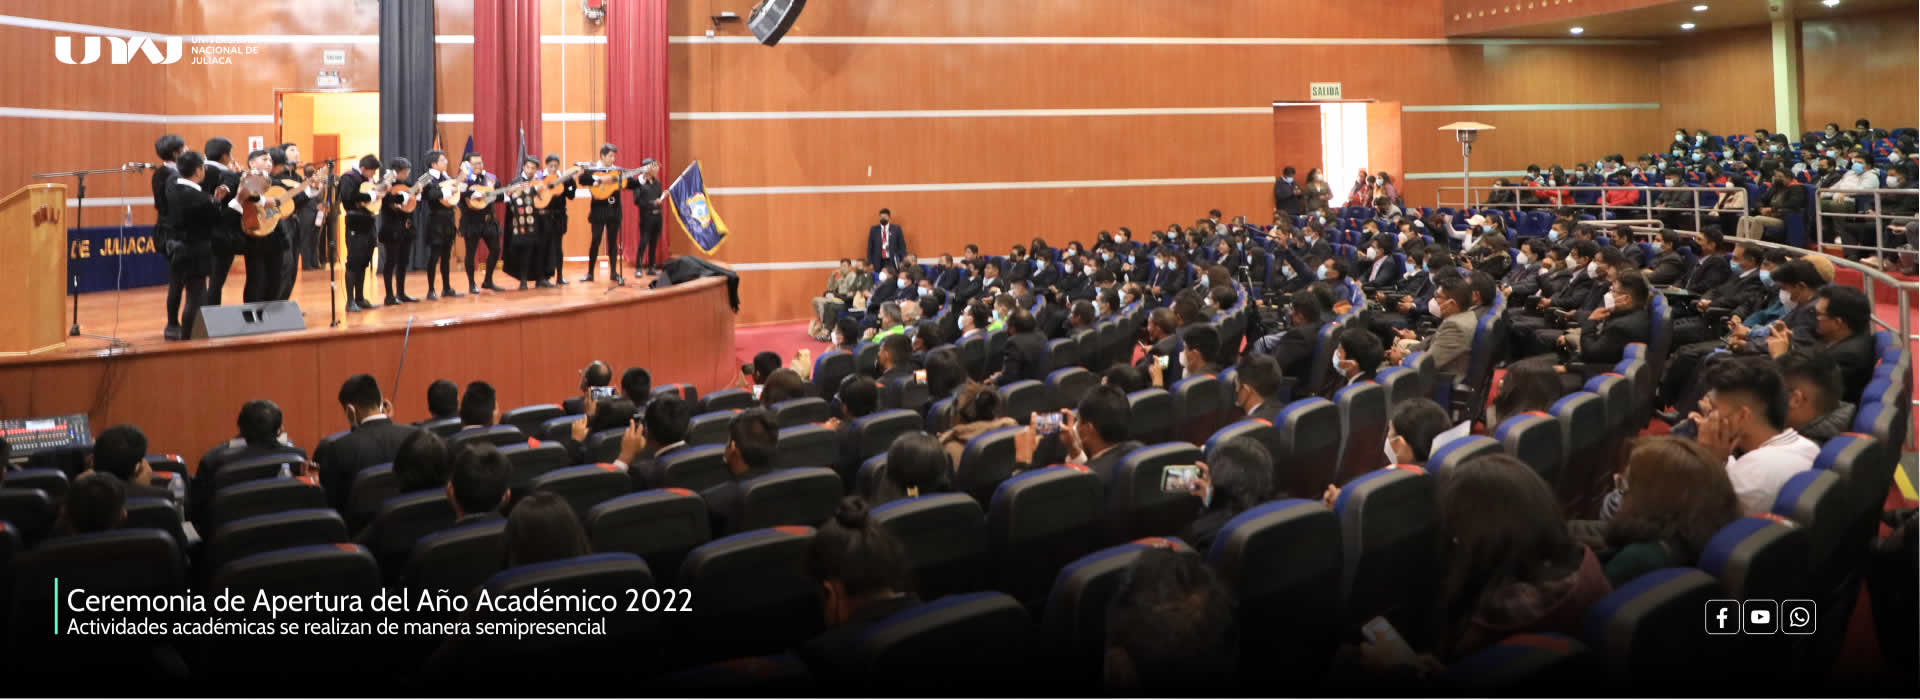 UNAJ - Auditorio Magno Ceremonia de Apertura 2022